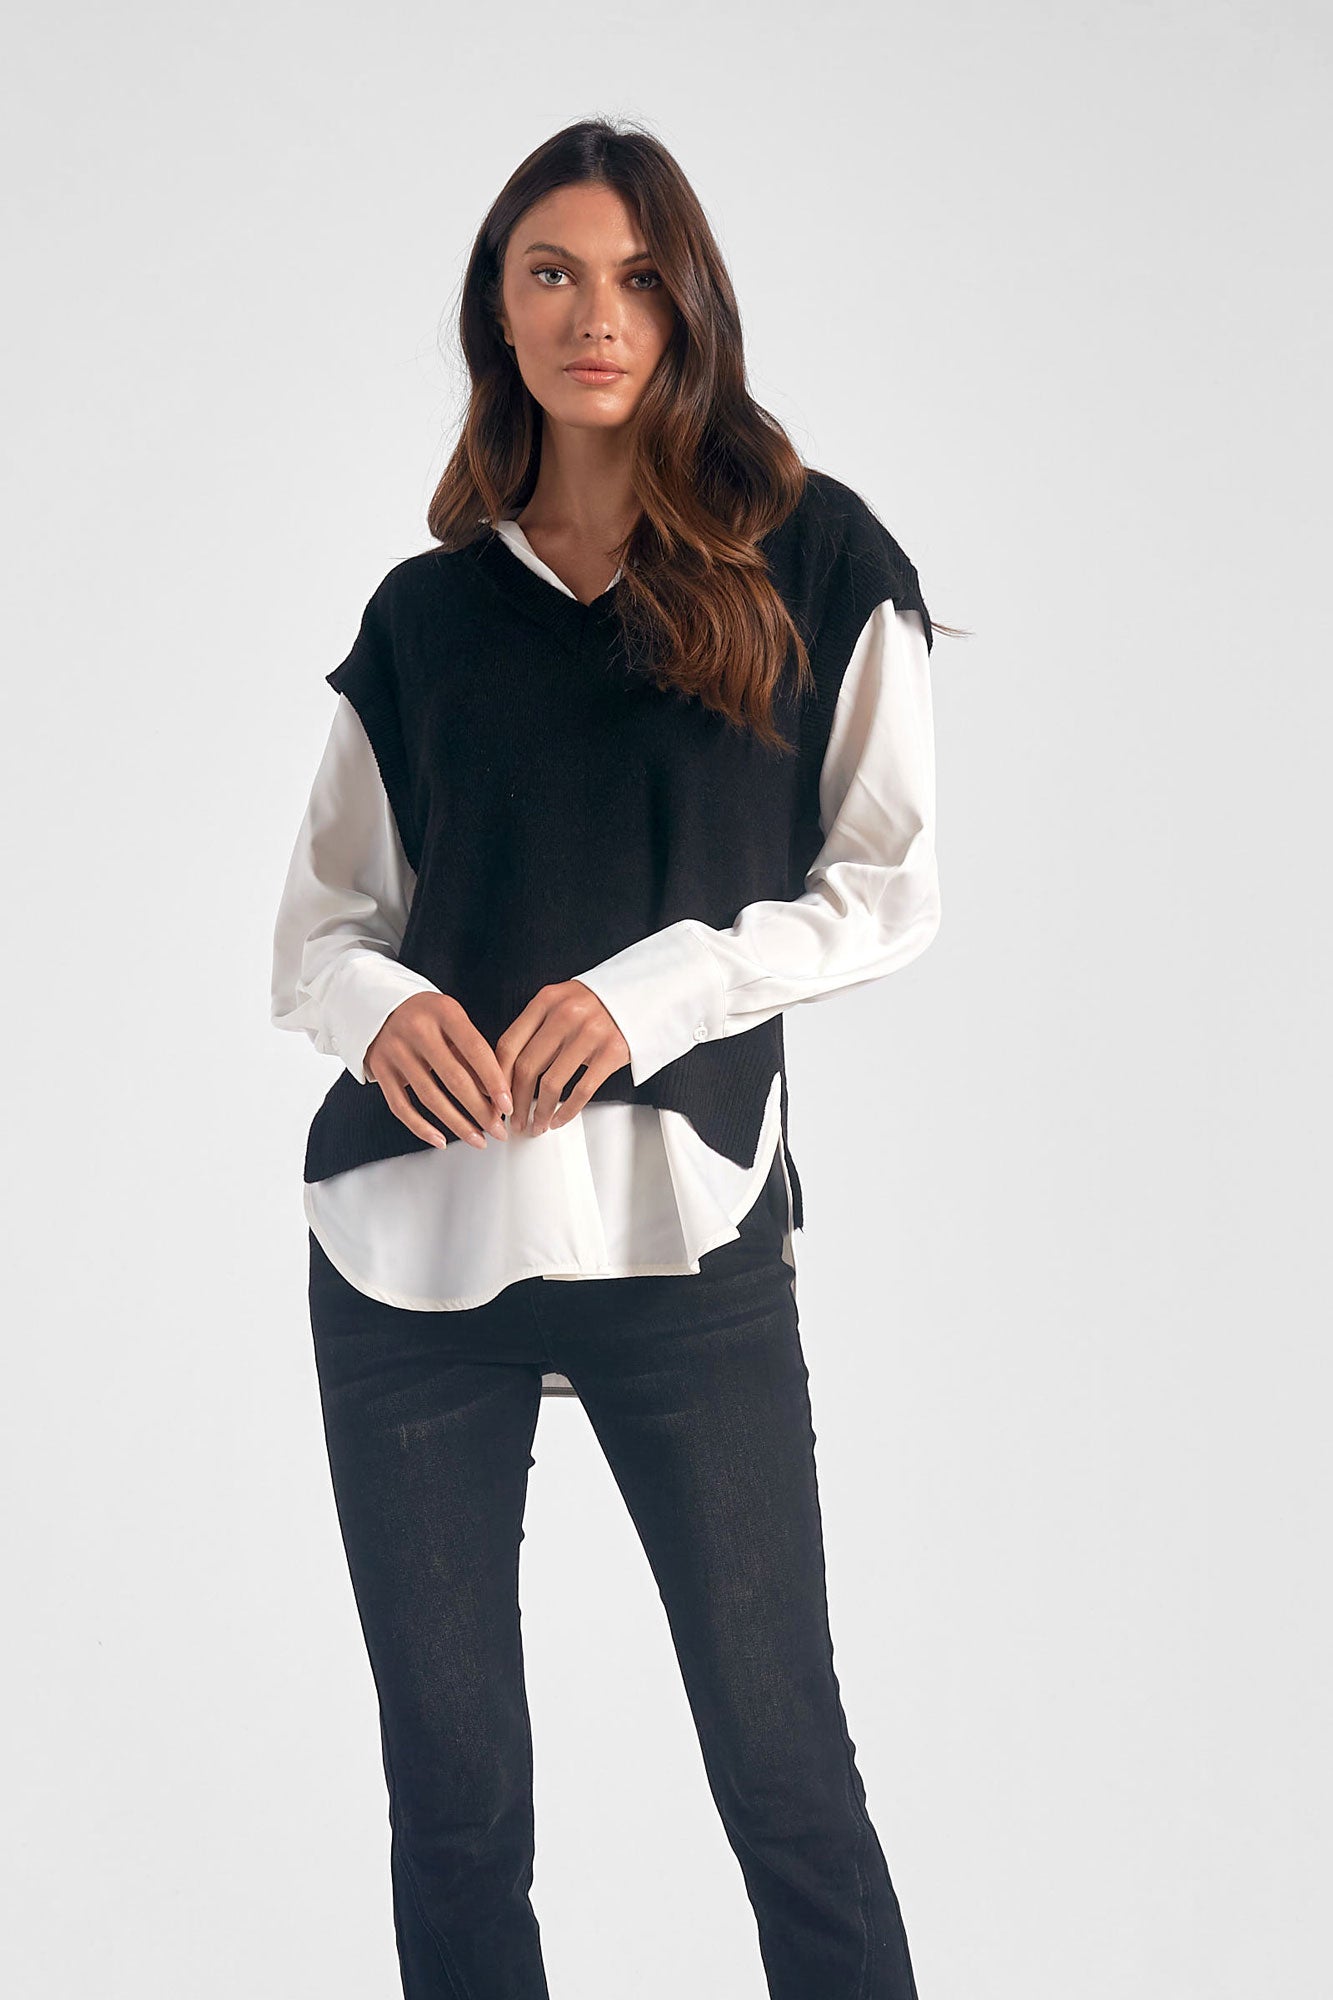 Elan Sweater Vest/Shirt Combo